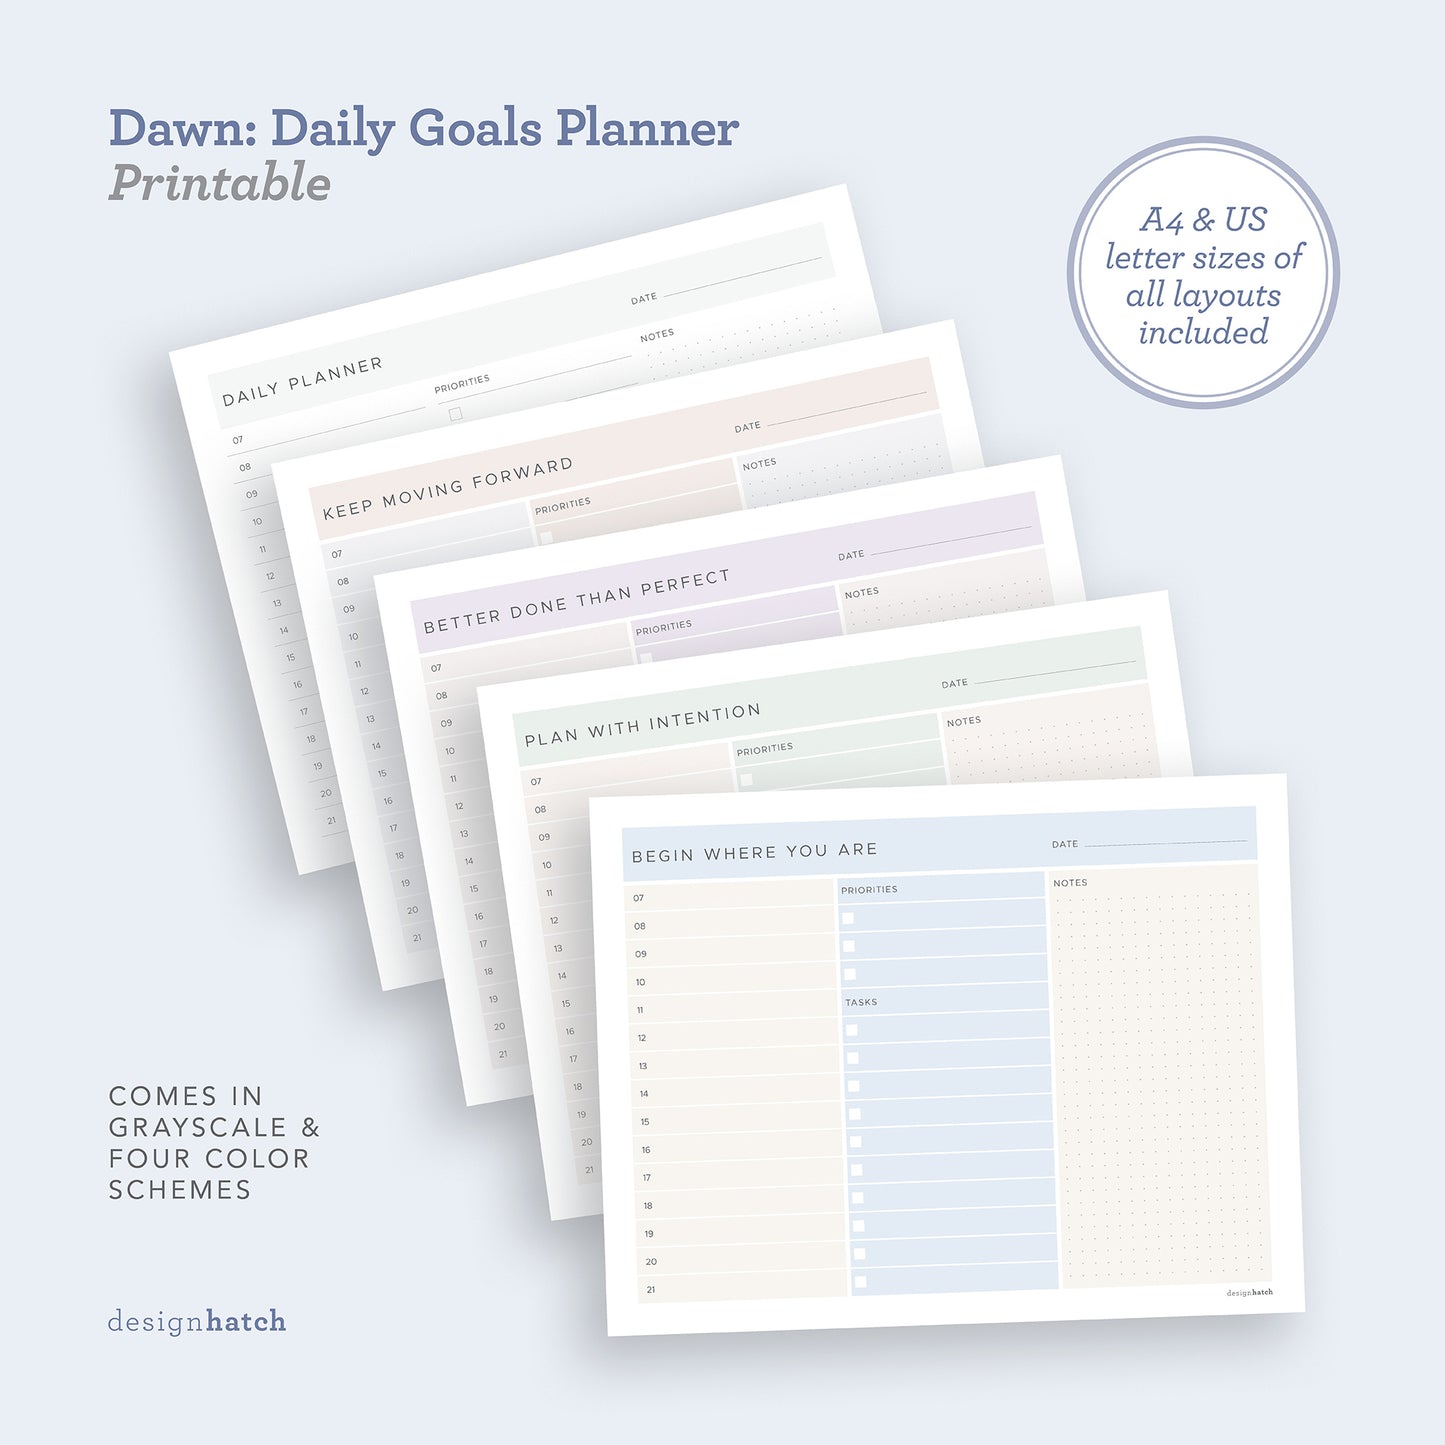 Dawn: Daily Goals Planner